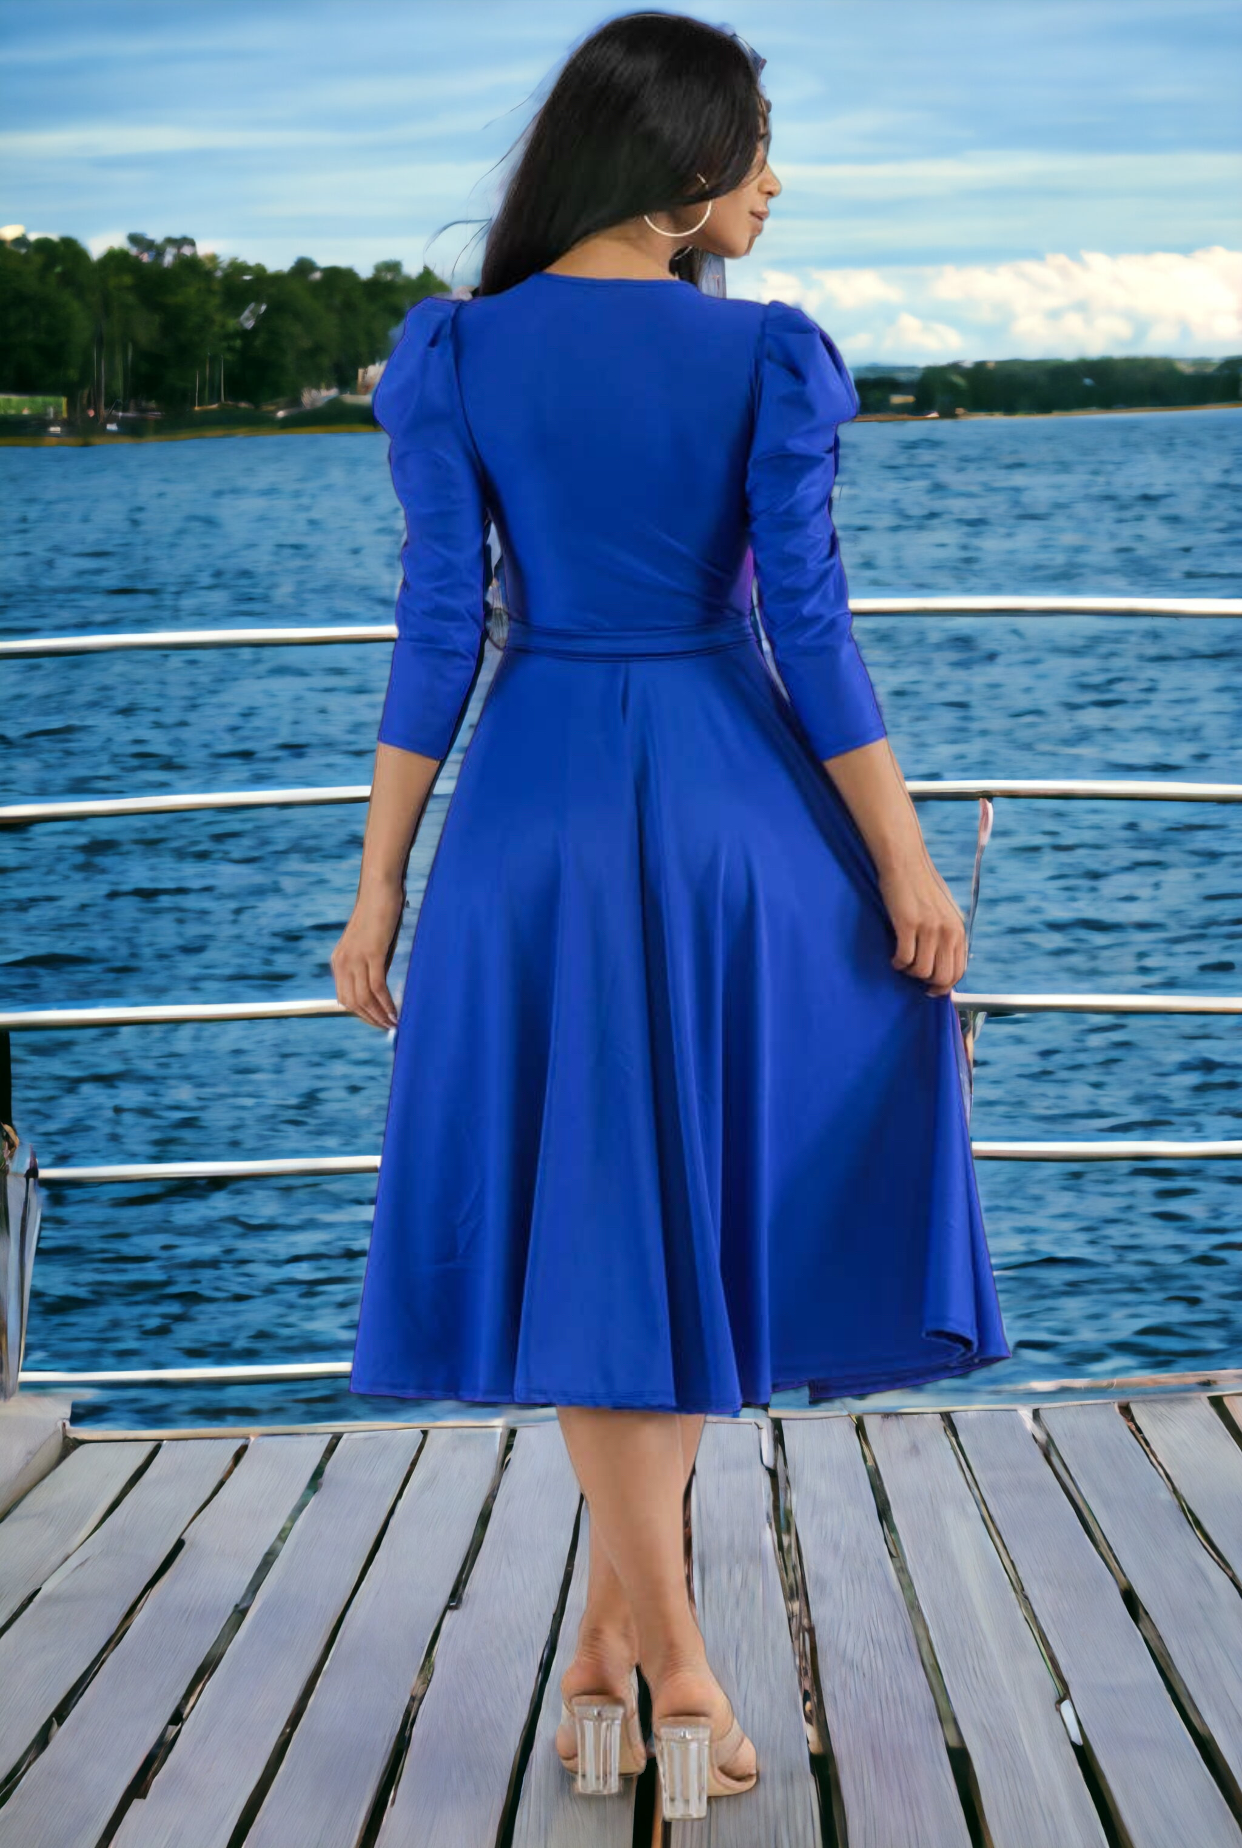 Puff Sleeve Cocktail Dress, Sizes 1X - 3X (Royal Blue)